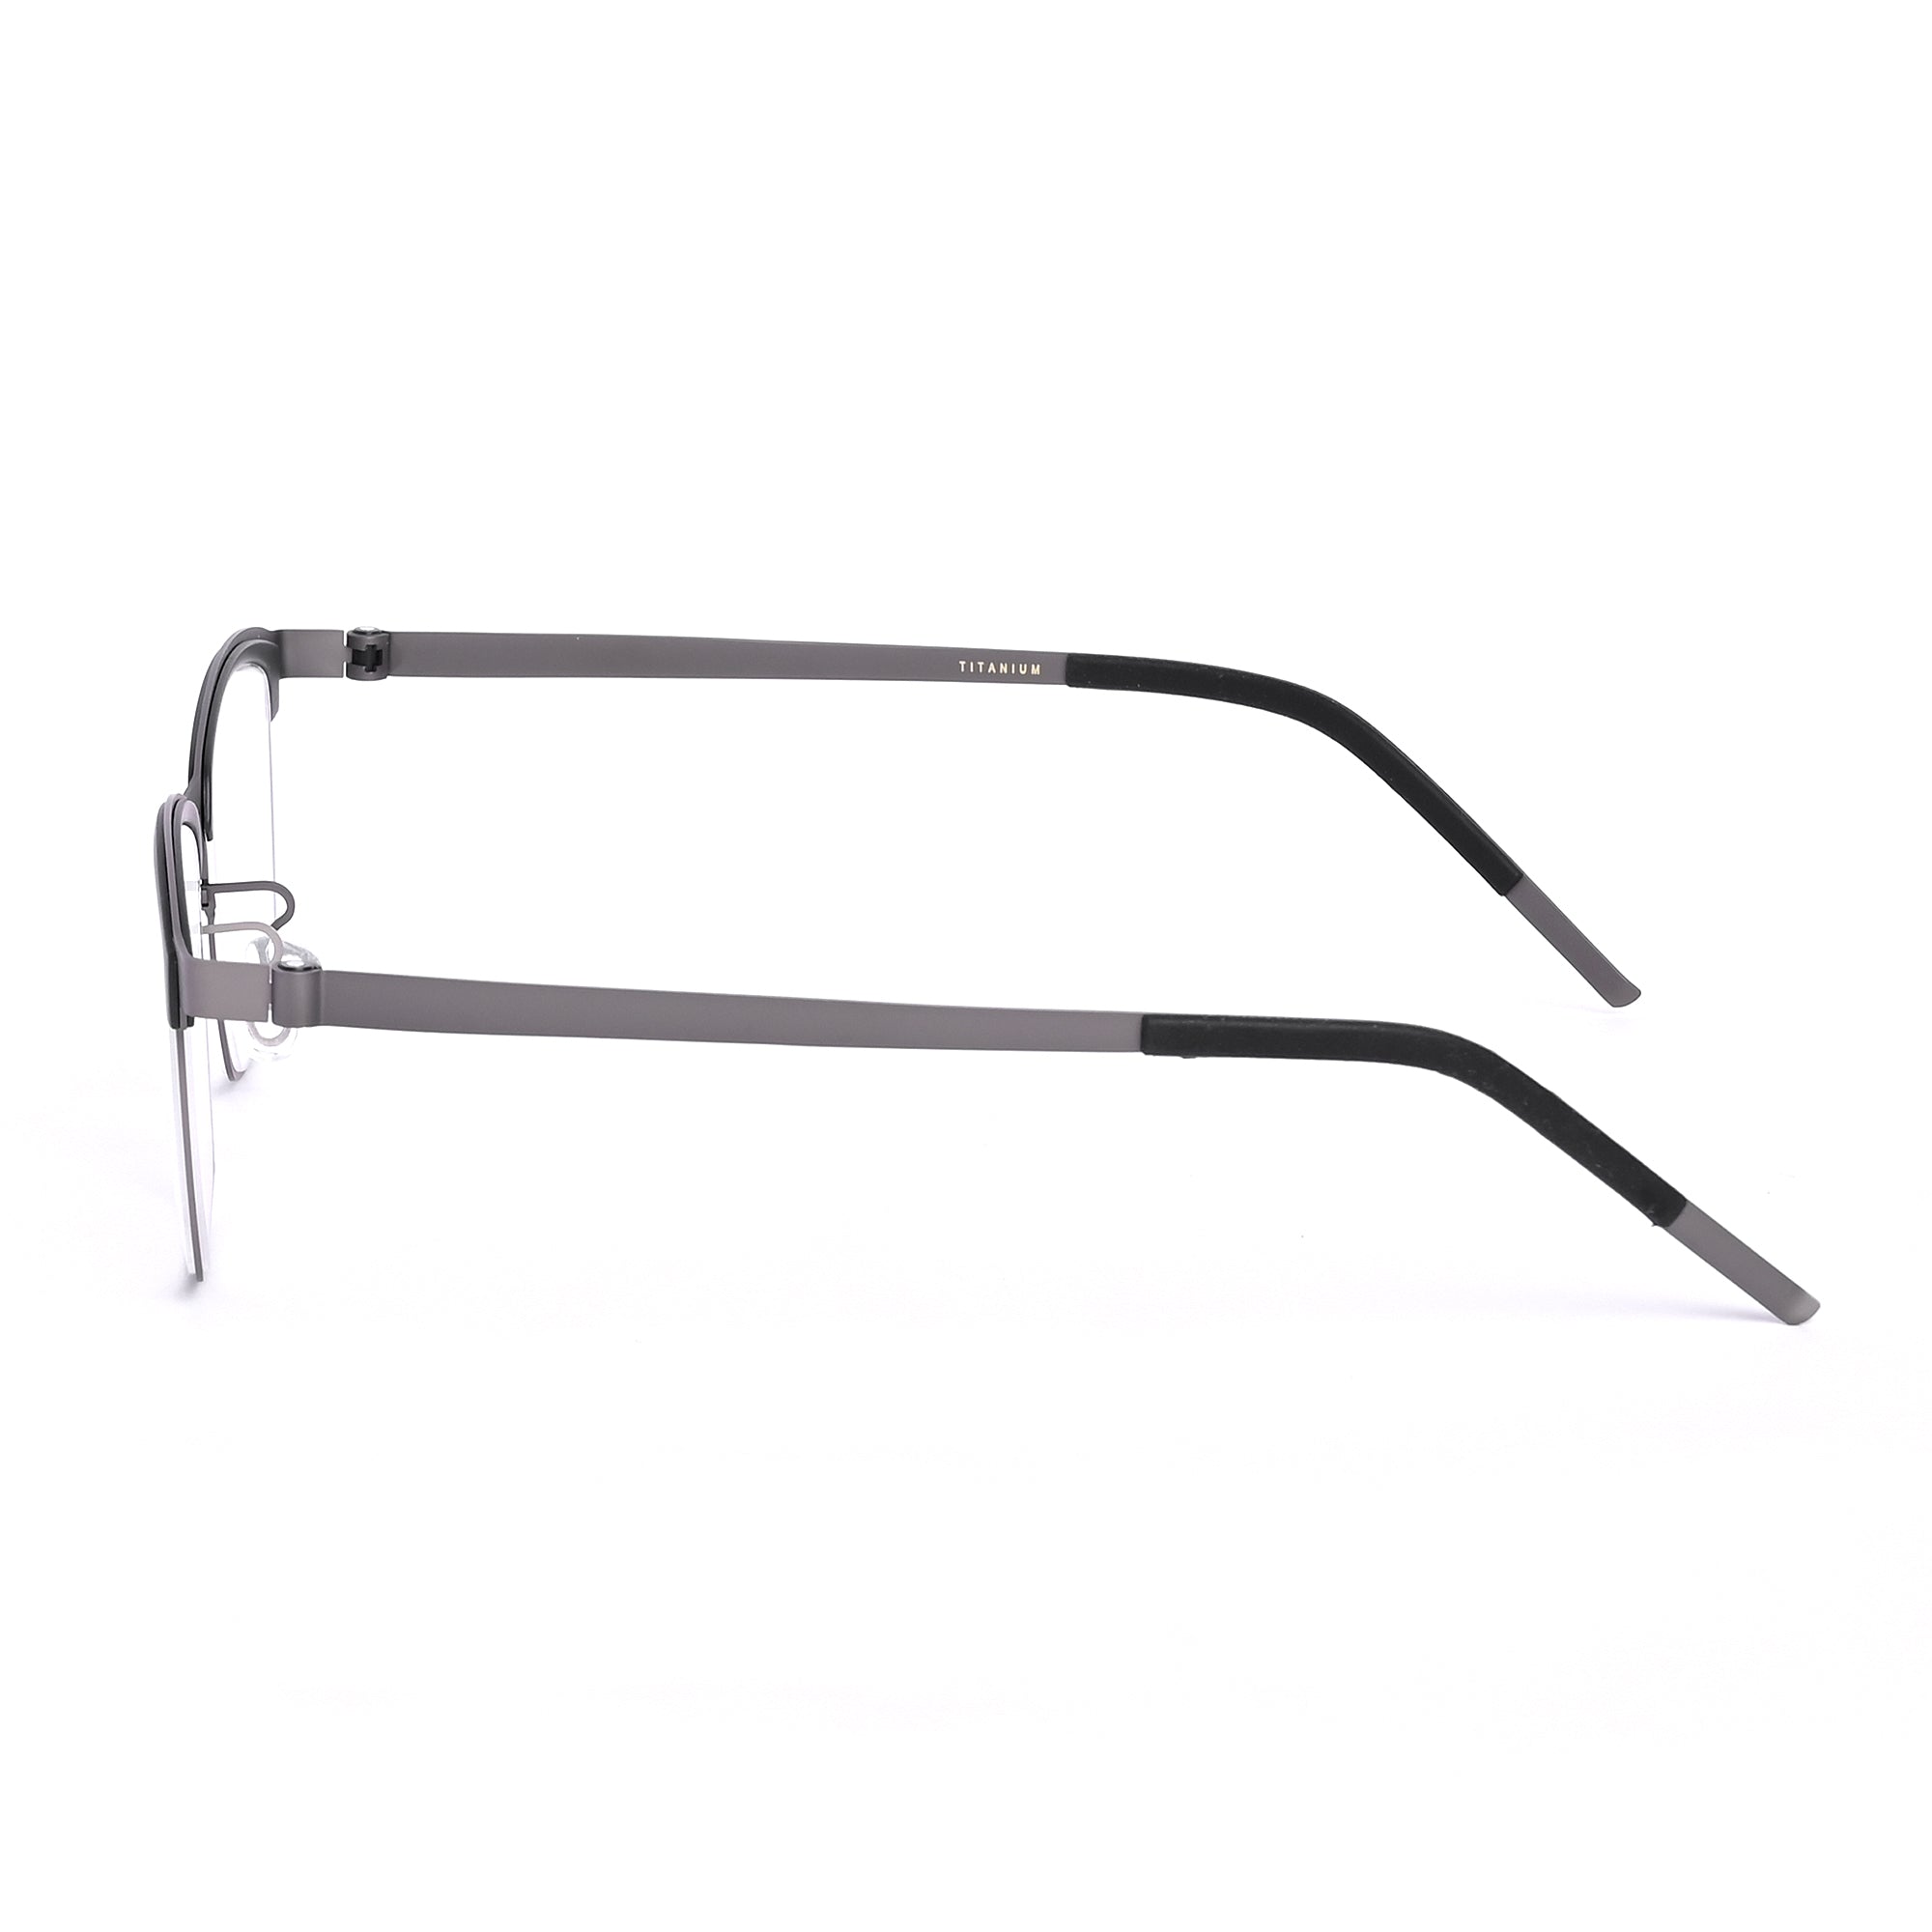 Black & Grey Square Keymount Eyeglasses - LG-007 BLKGR